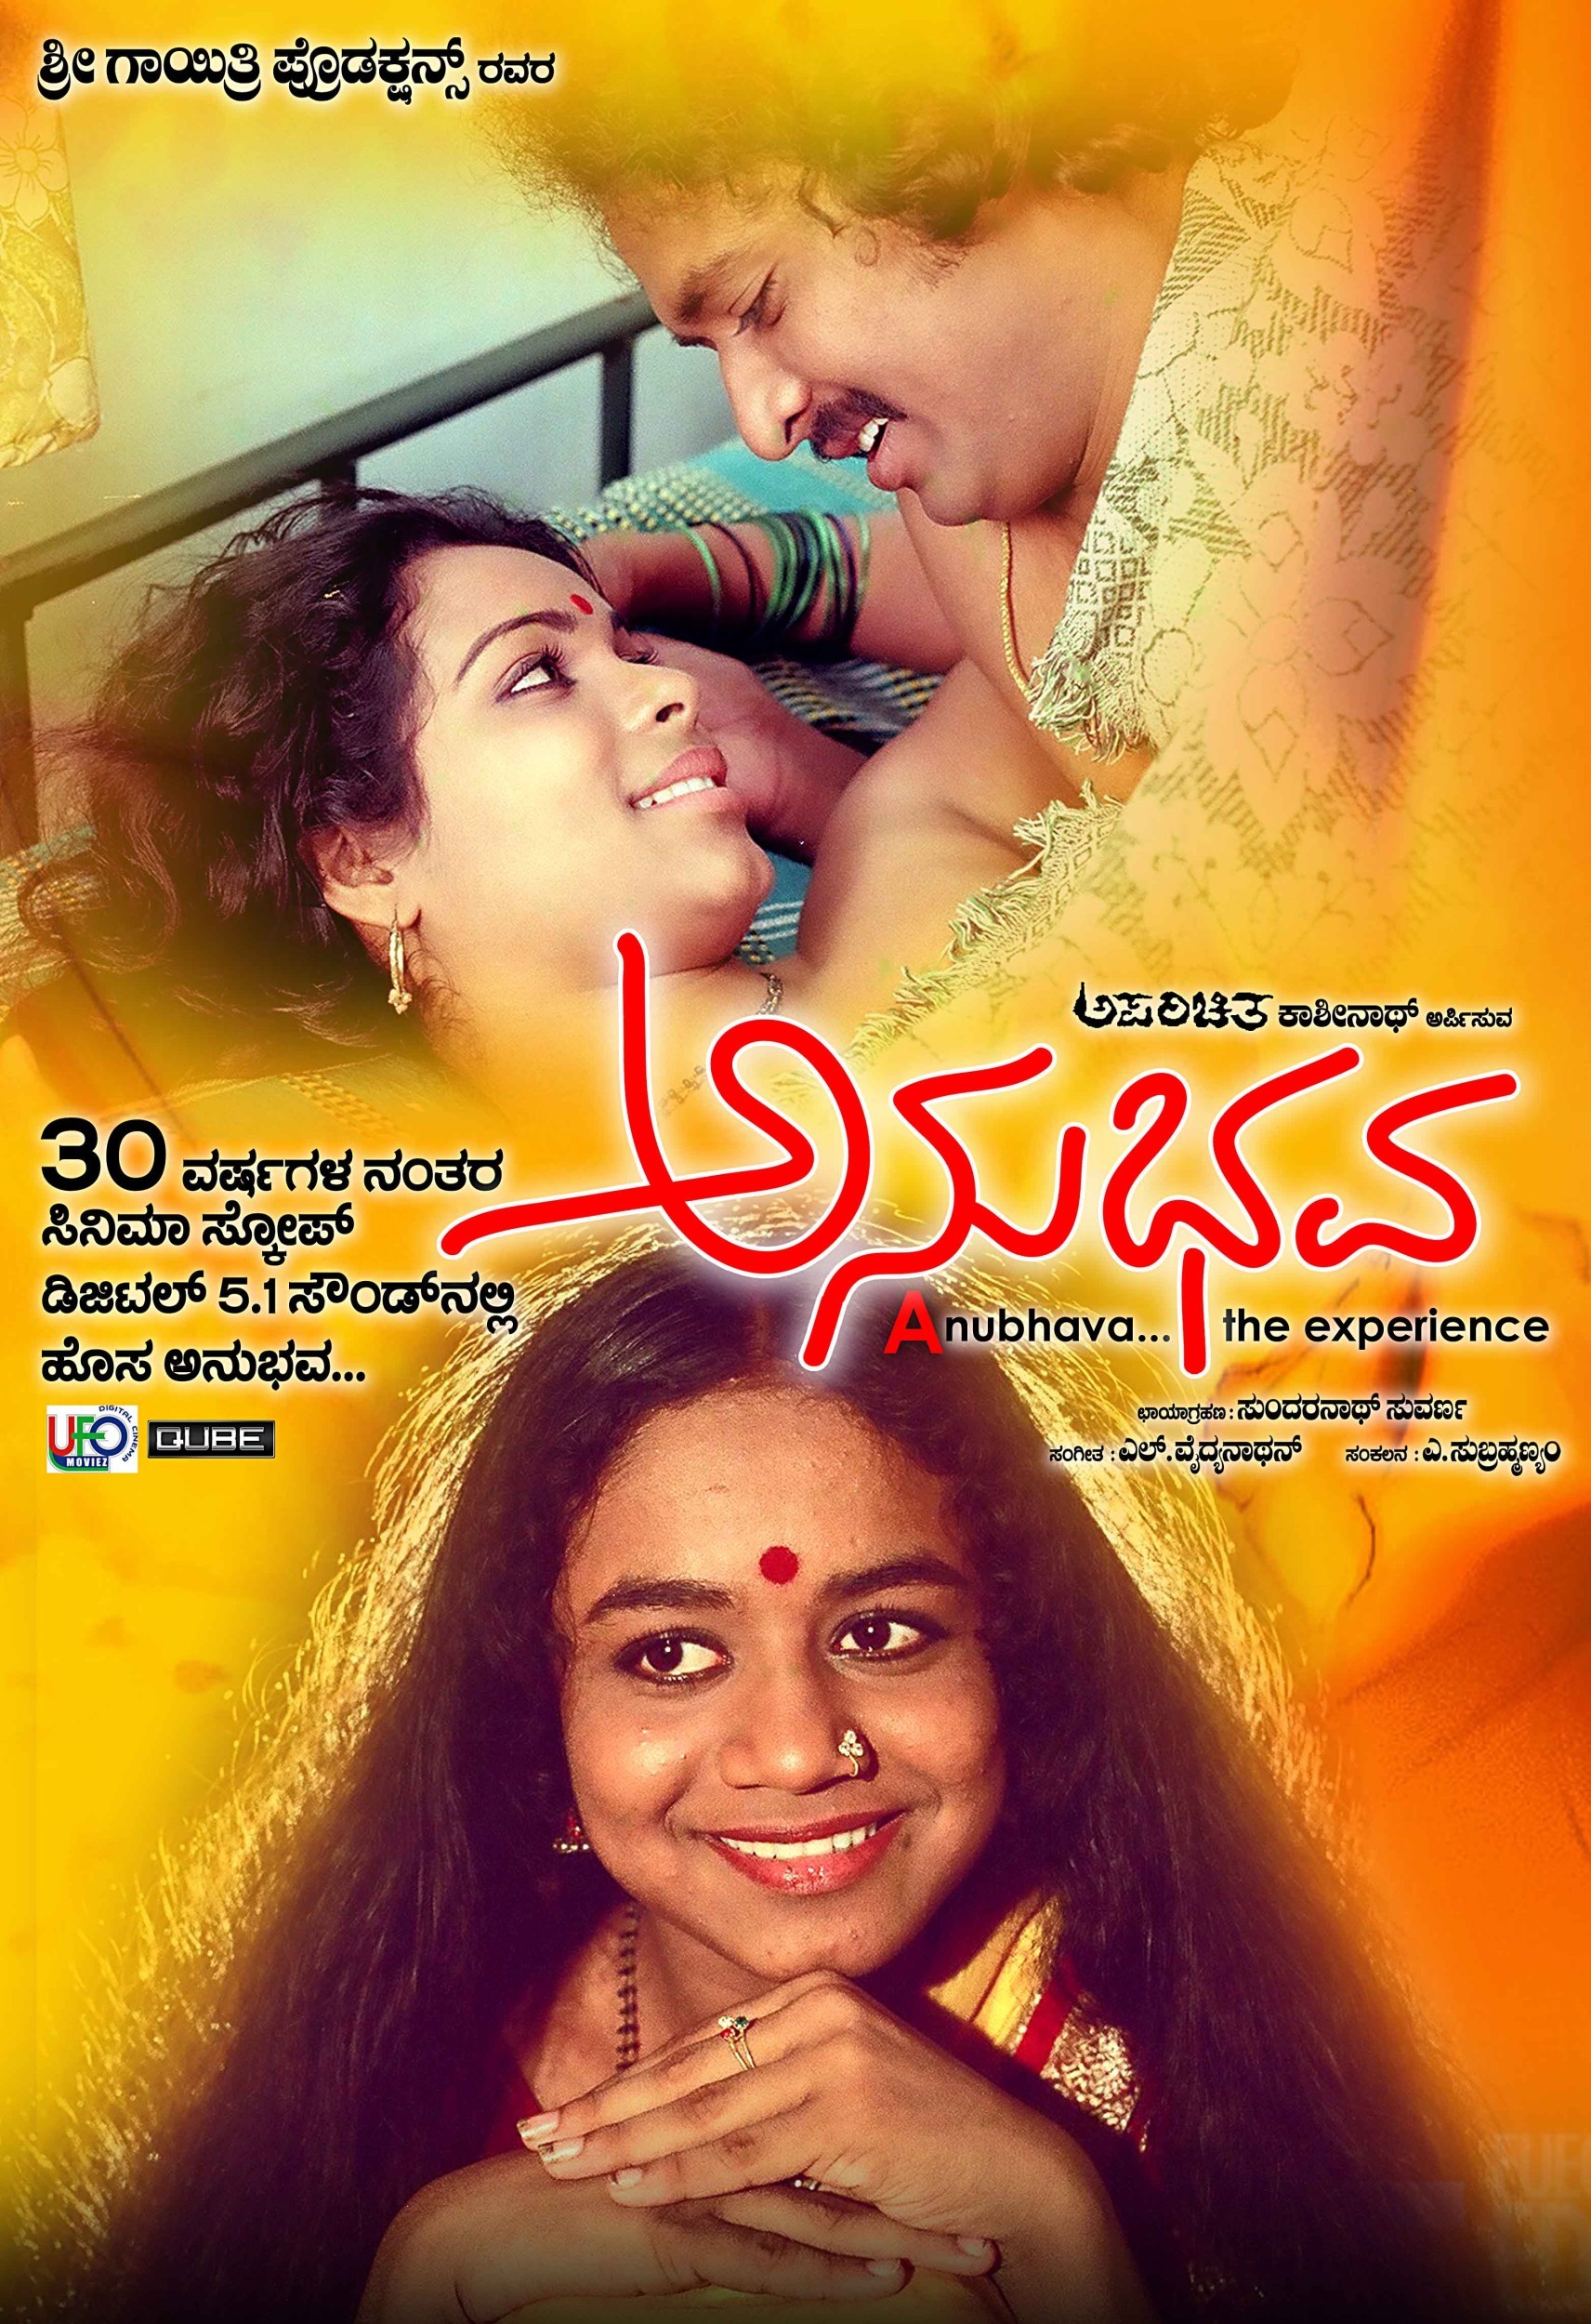 Mega Sized Movie Poster Image for Anubhava (#6 of 7)